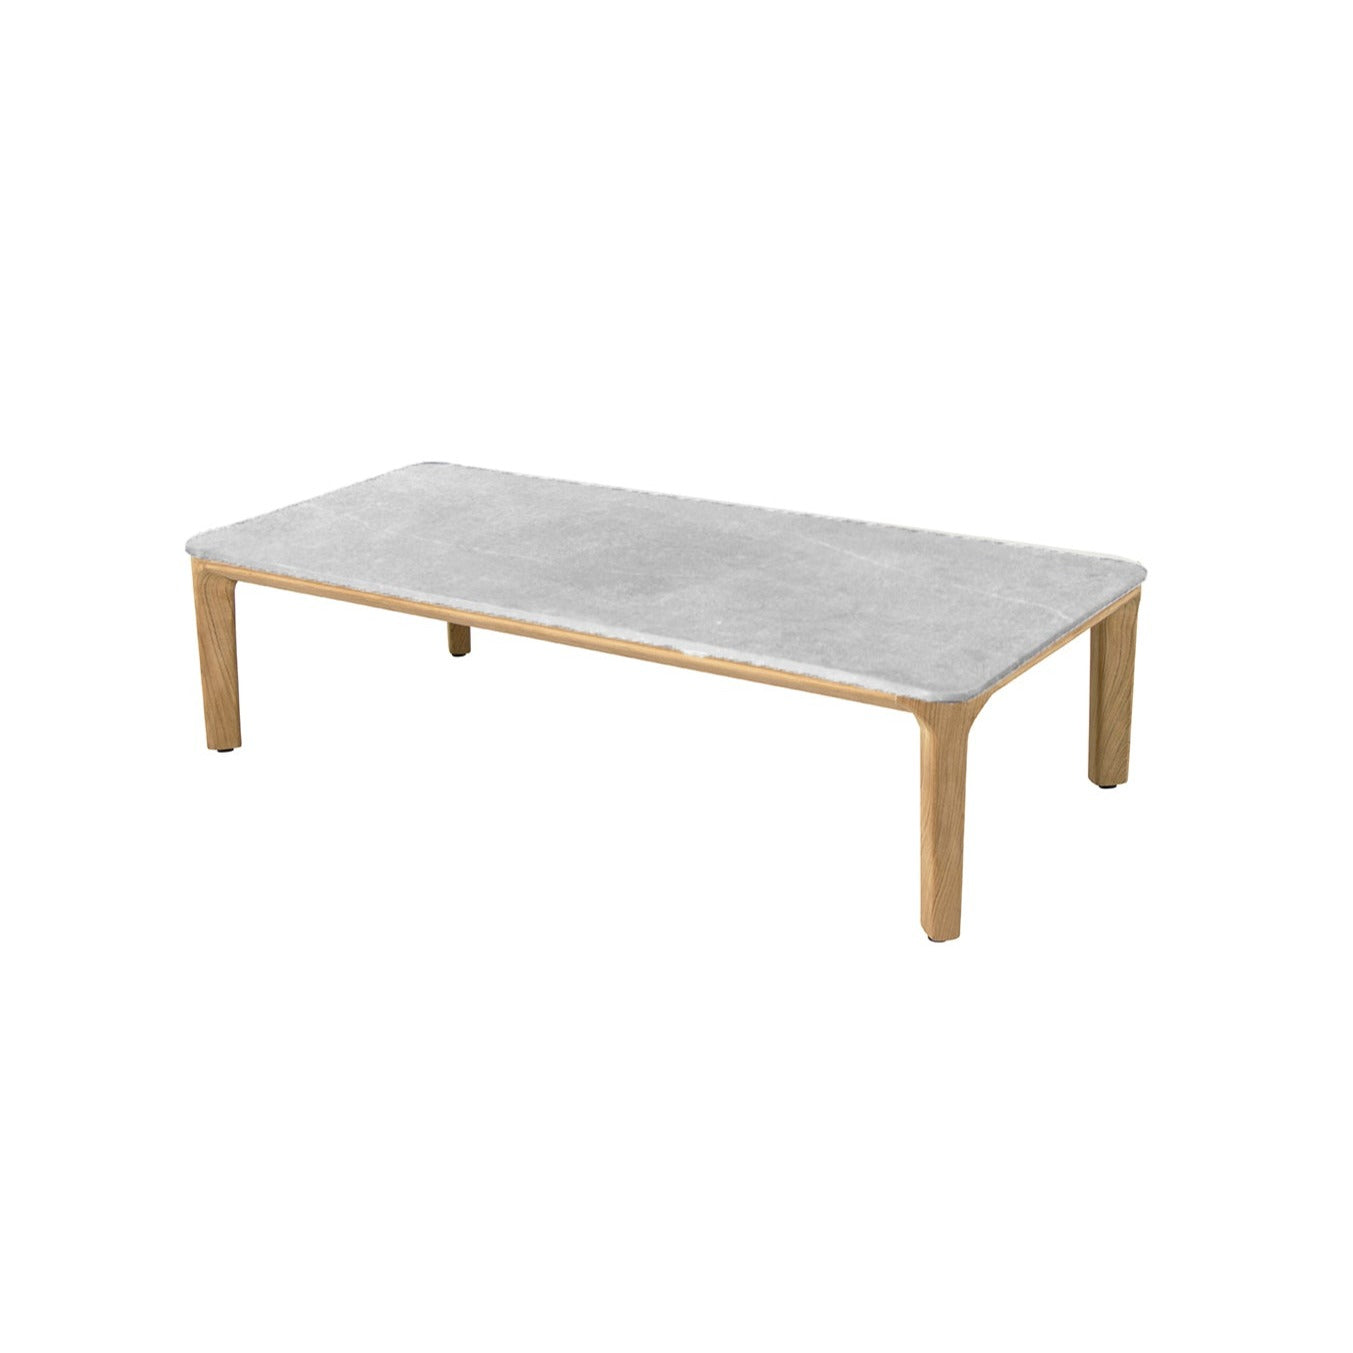 Cane-Line - Aspect coffee table, 120x60 cm | 50808T